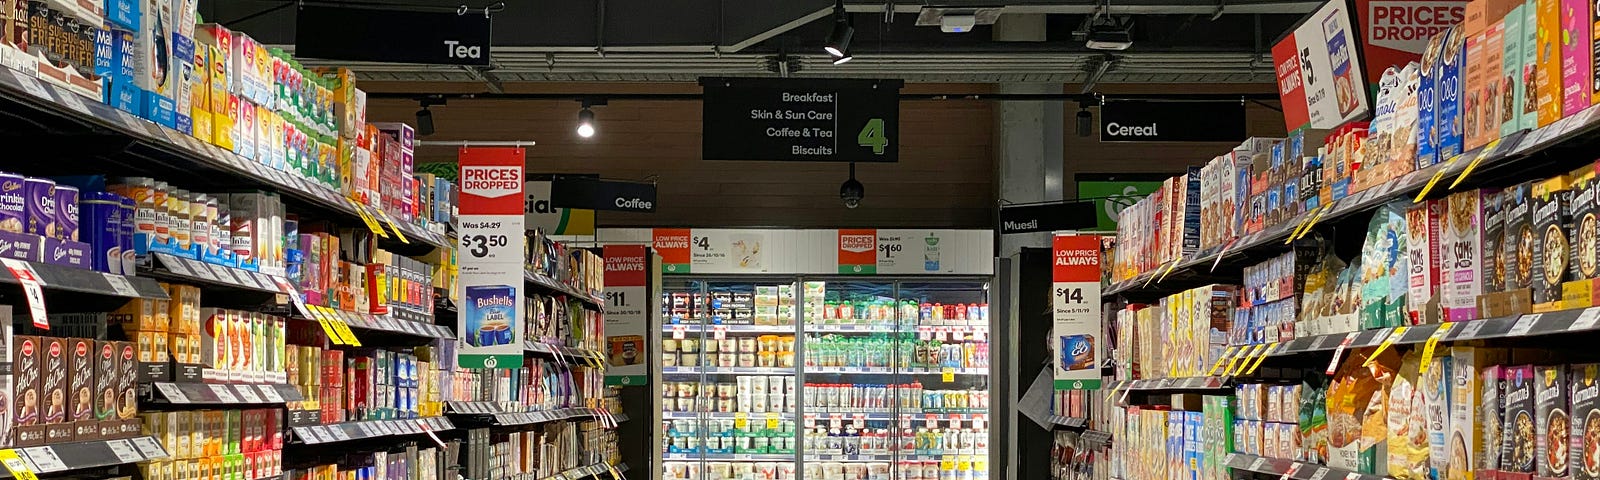 Fully stocked shelves in a supermarket.